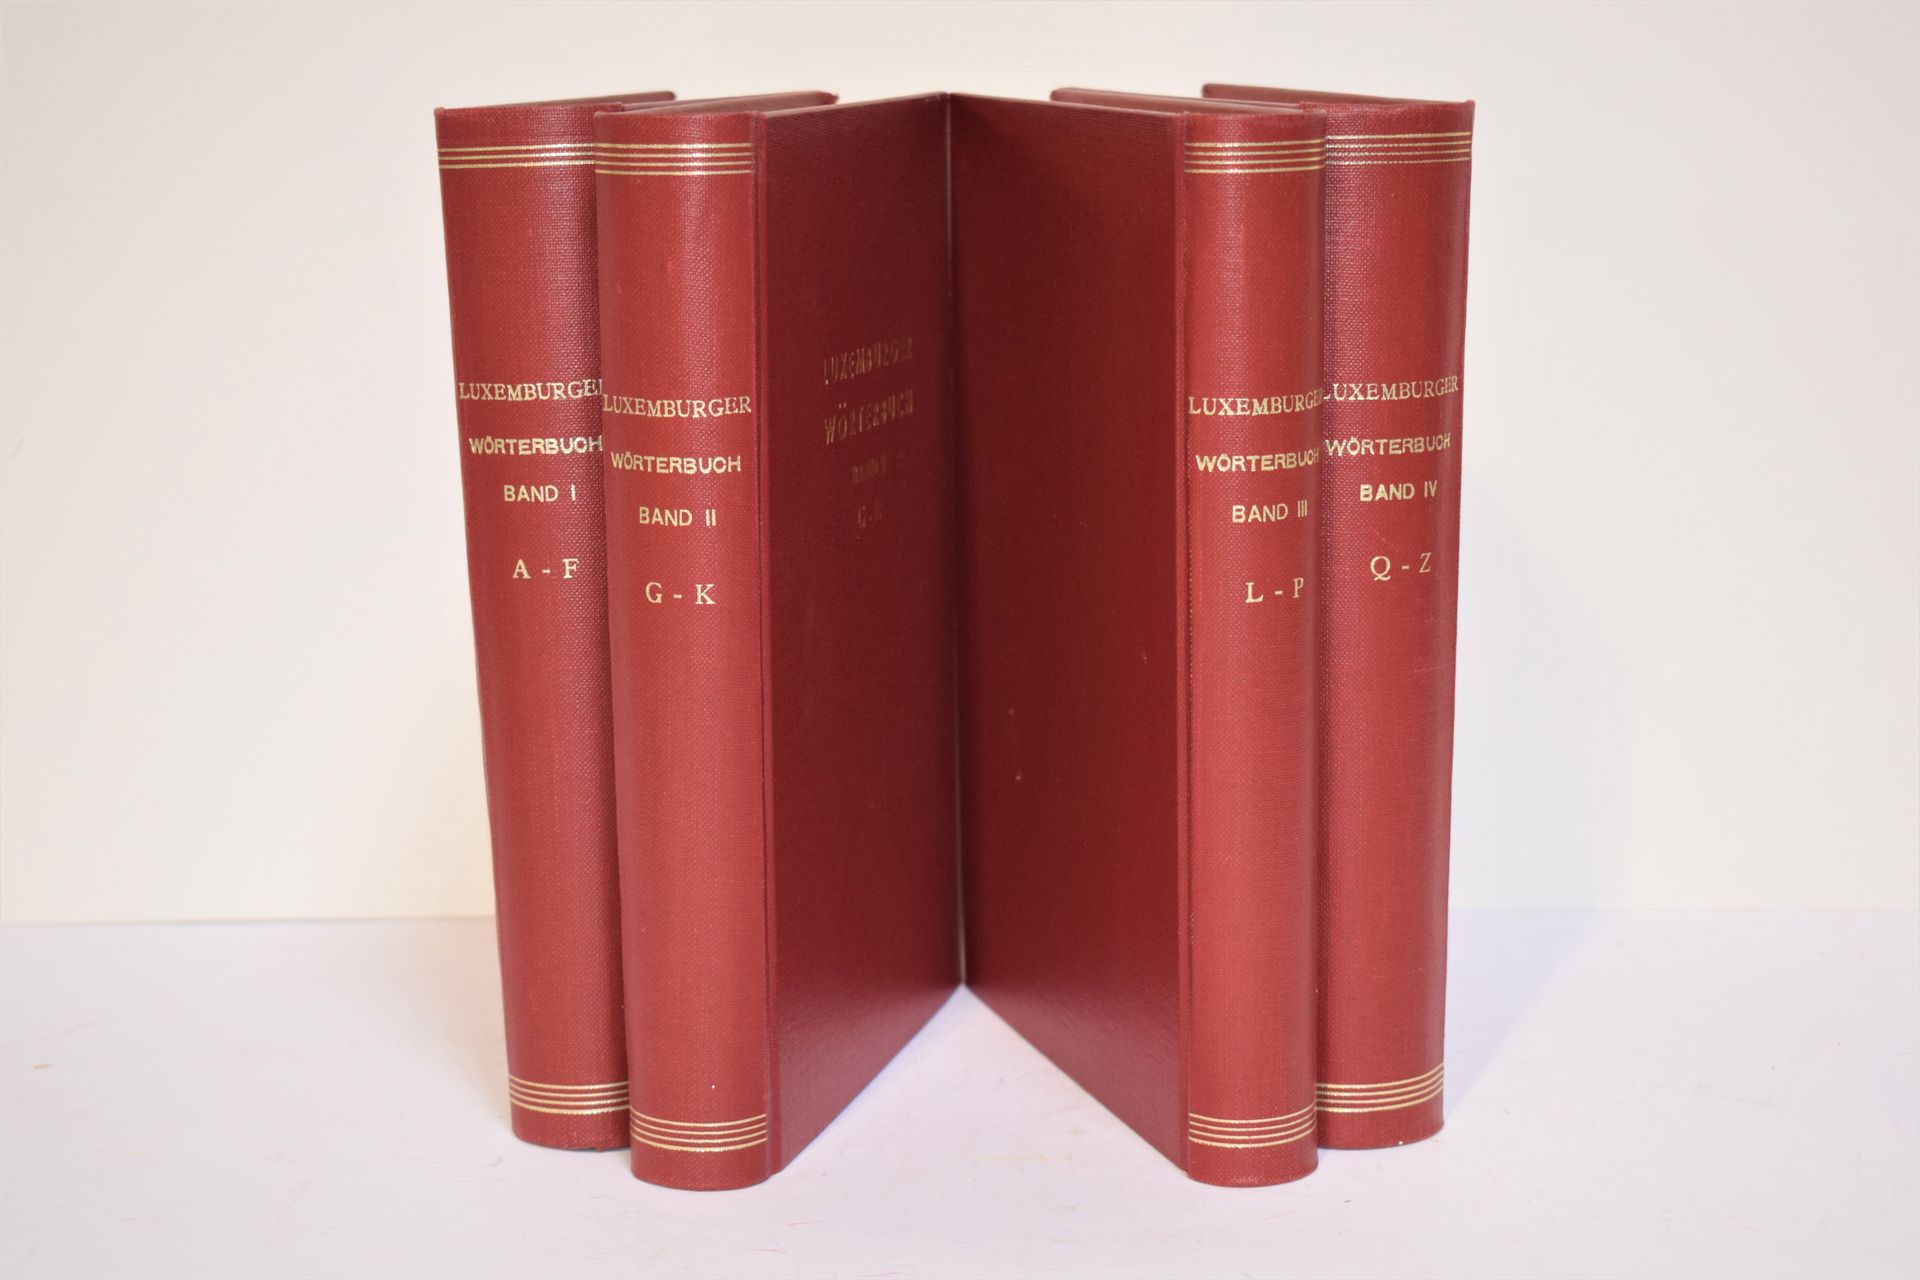 Null (词典）词典共4卷（第一卷A-F，第二卷G-K，第三卷L-P和第四卷Q-Z），由Wörterbuchkommission: Luxemburger W&hellip;